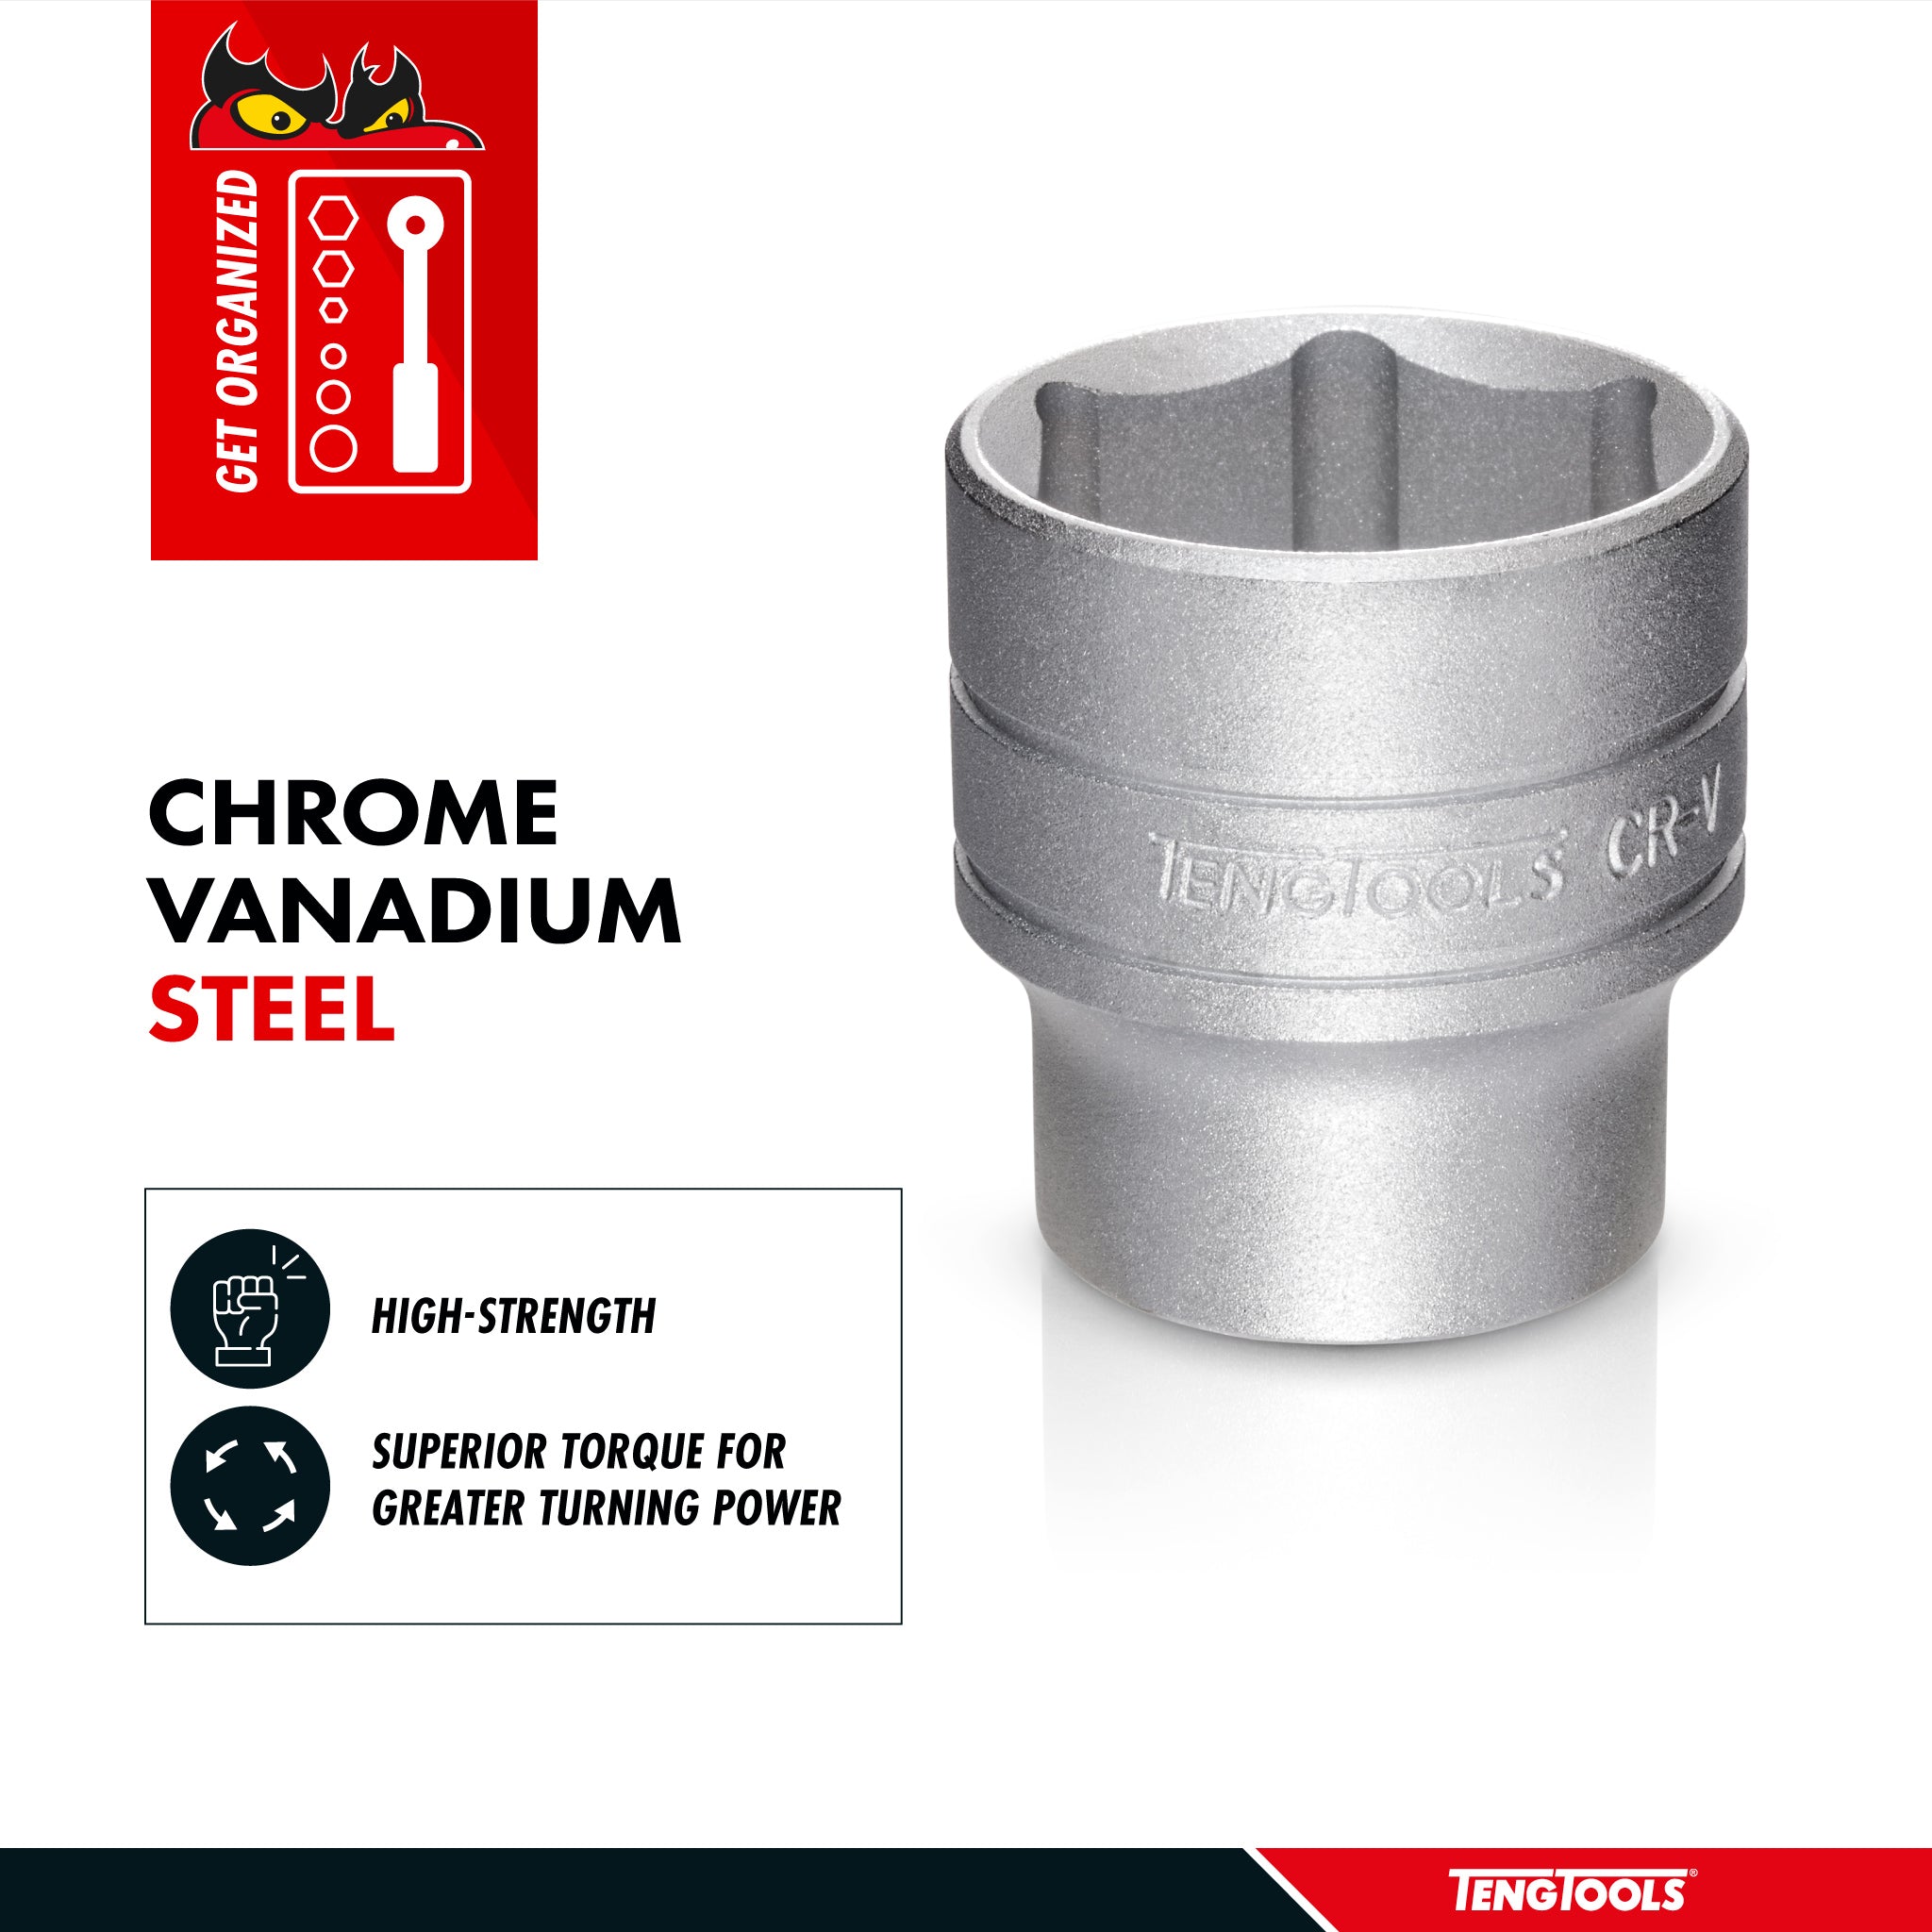 Teng Tools 1/4 Inch Drive 6 Point SAE Shallow Chrome Vanadium Sockets - 1/2